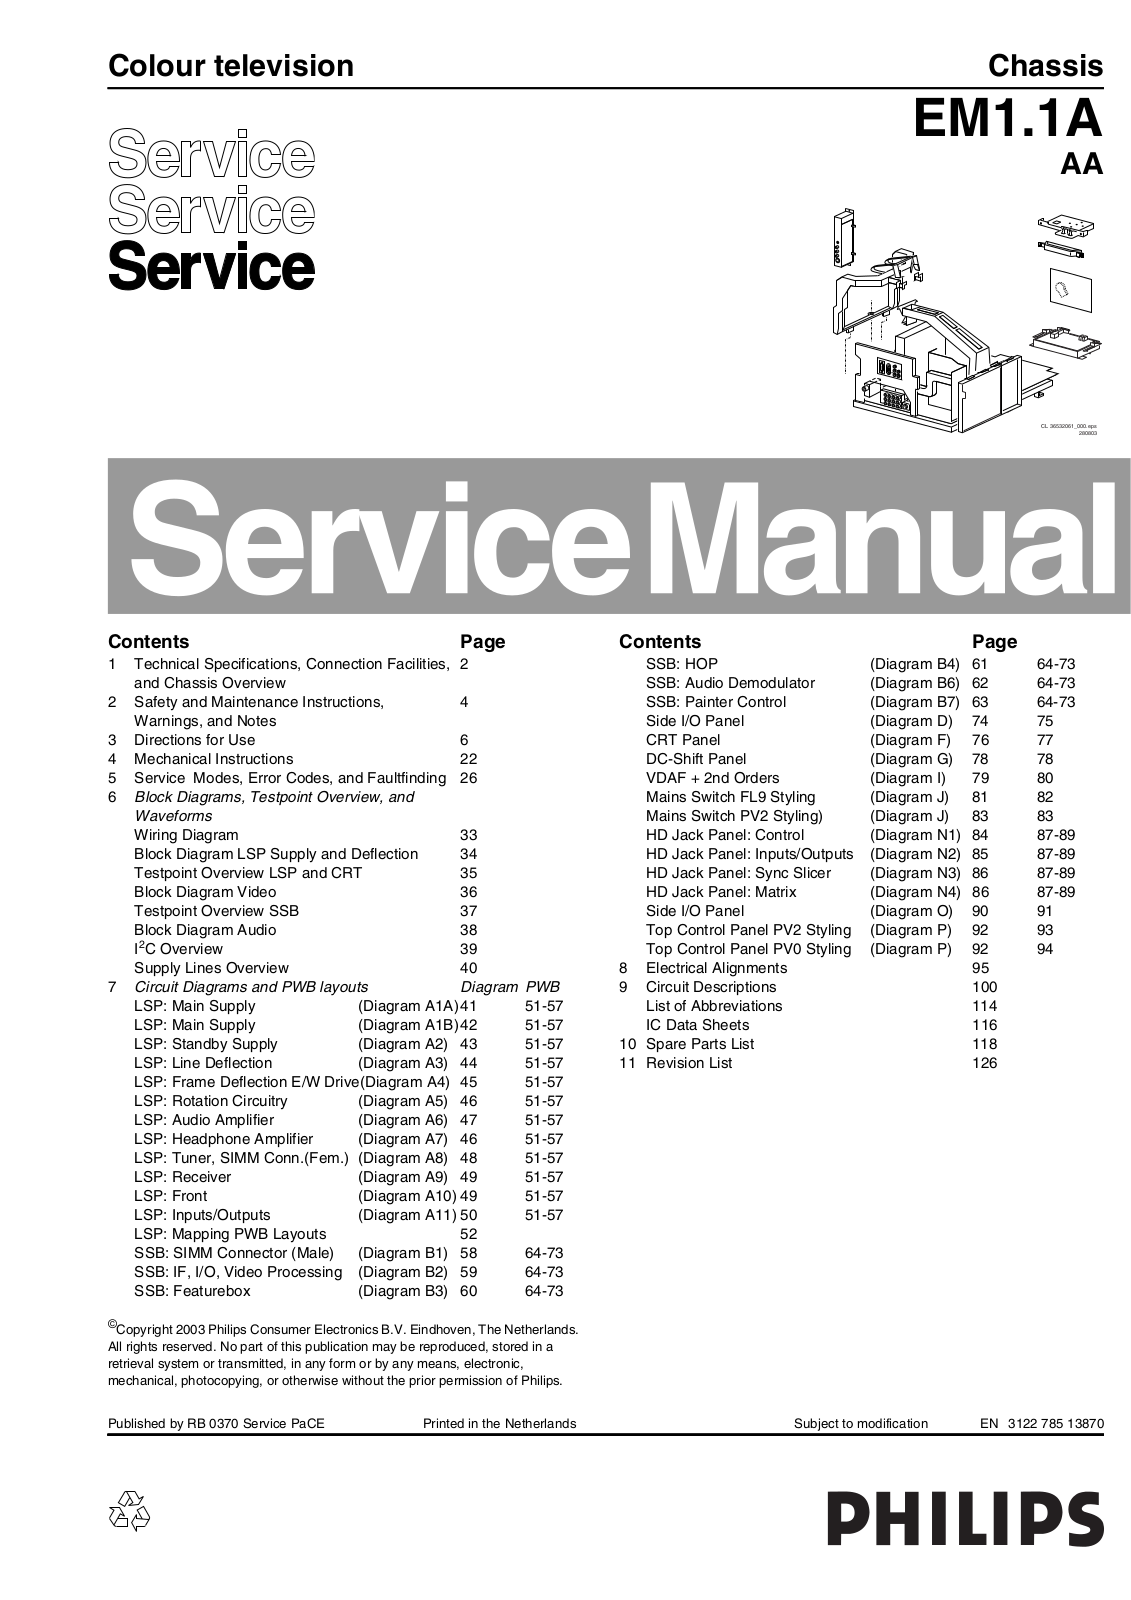 Philips EM1.1A Service Manual